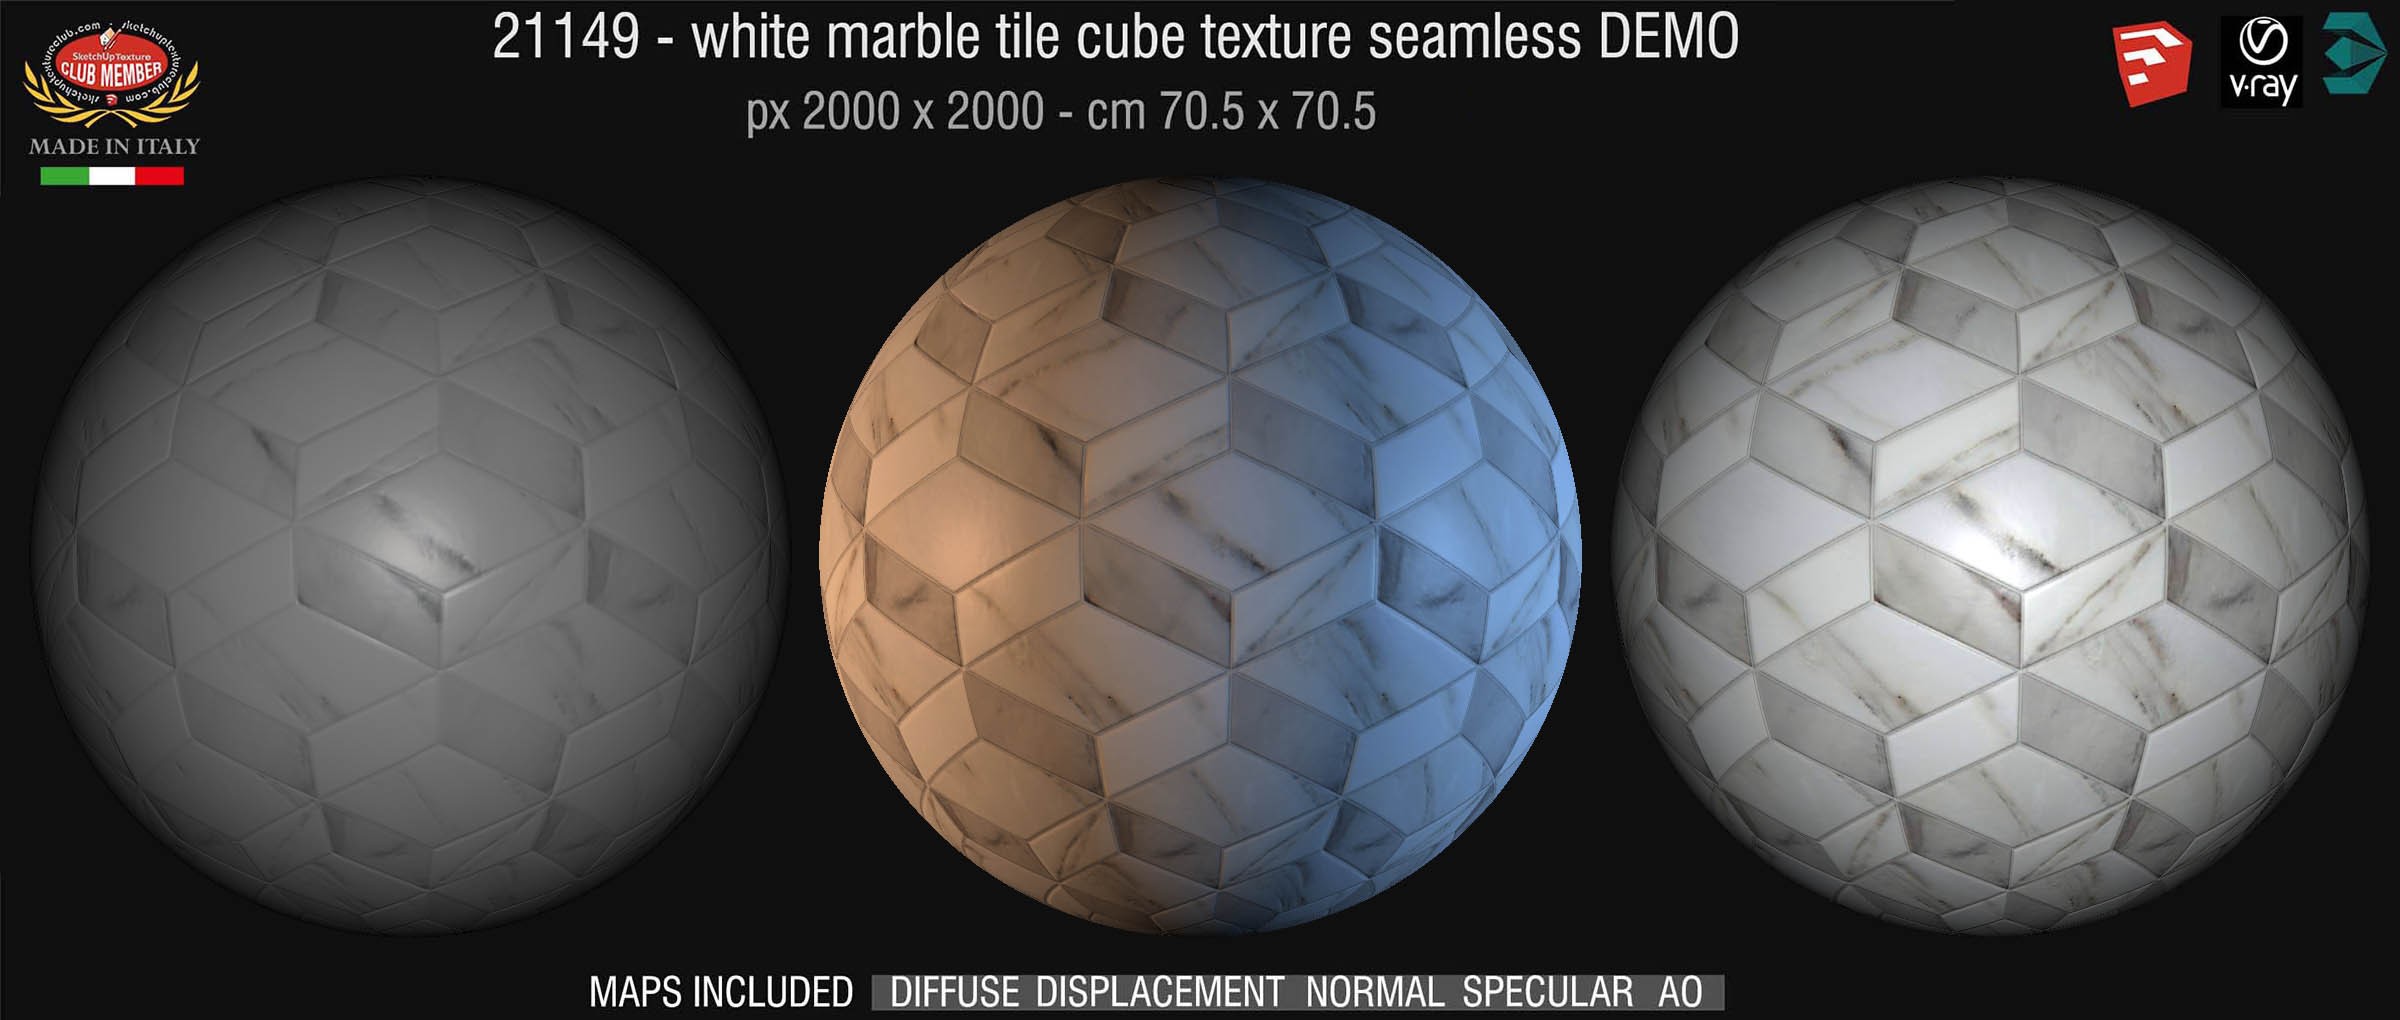 21149 White marble tiles cubes texture seamless + maps DEMO